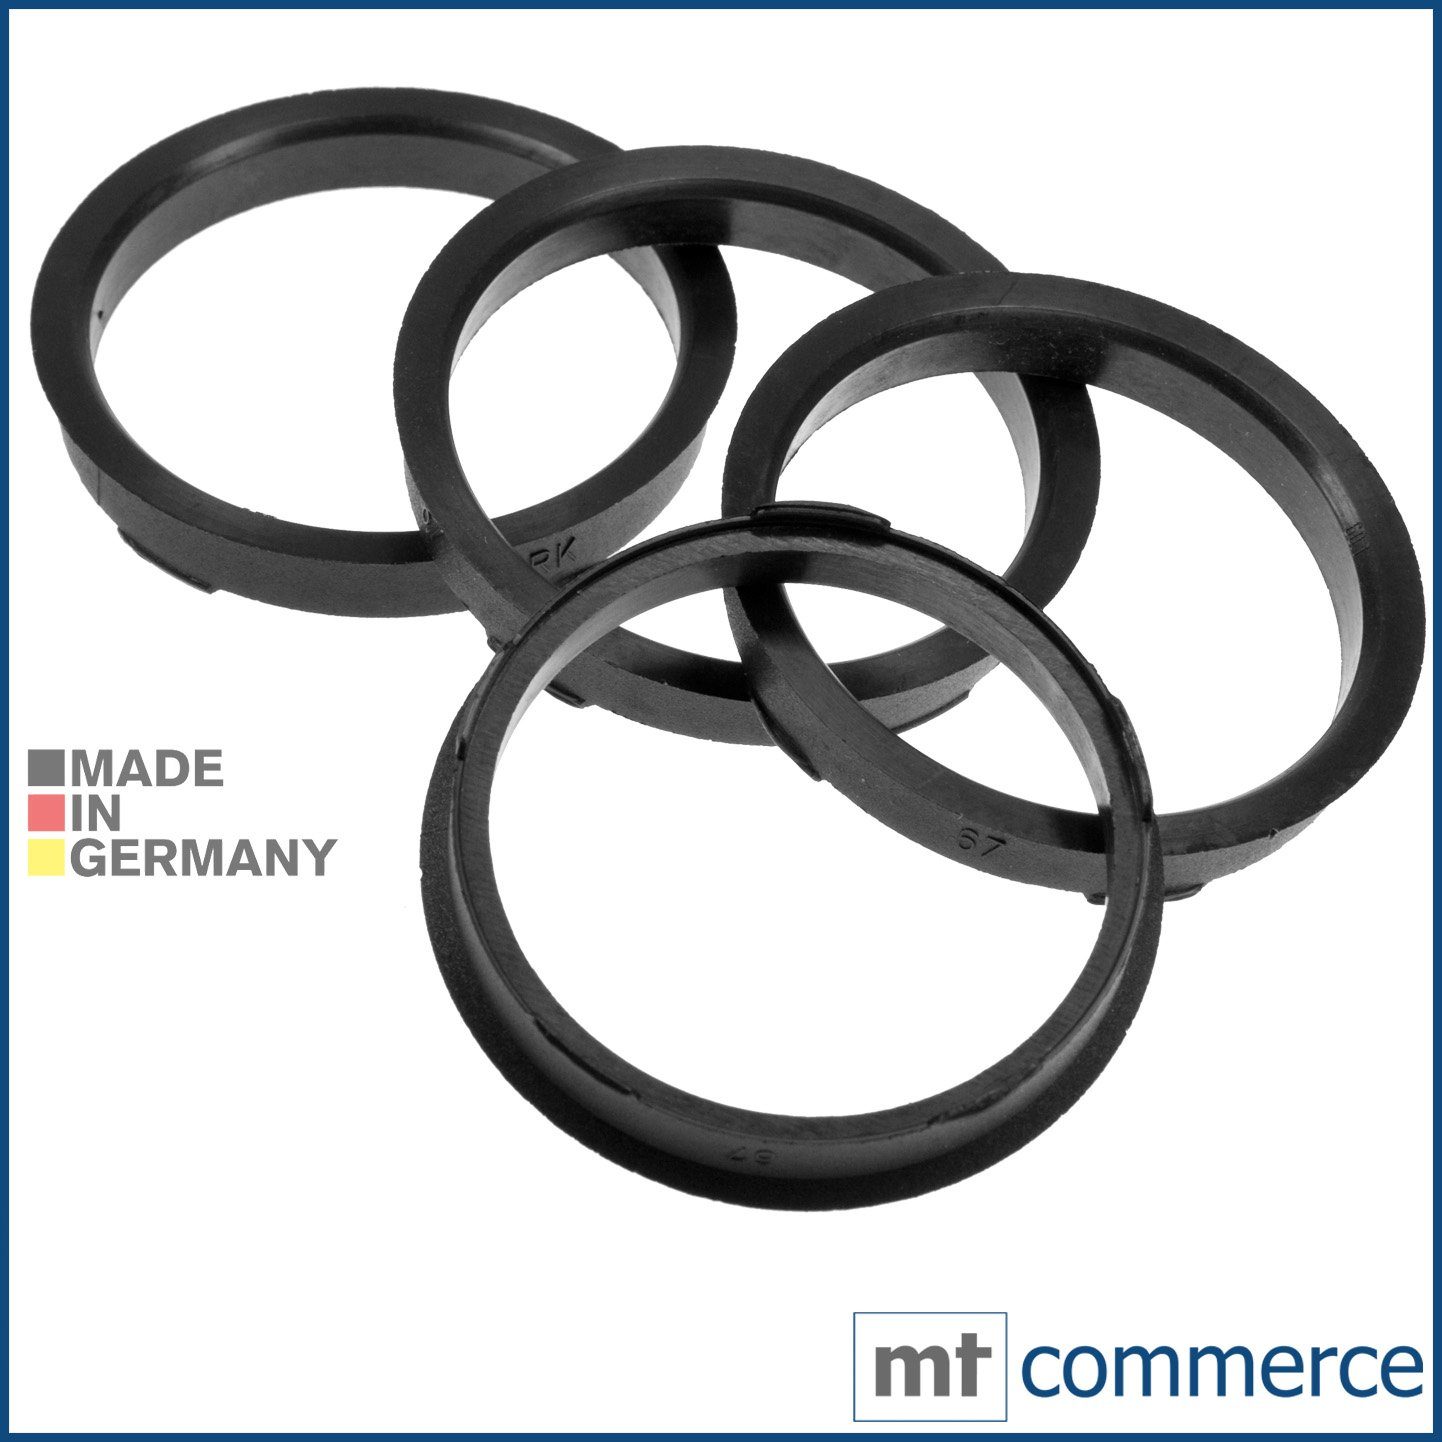 RKC Reifenstift 4X Zentrierringe schwarz Felgen Ringe Made in Germany, Maße: 67,0 x 60,1 mm | Reifenstifte